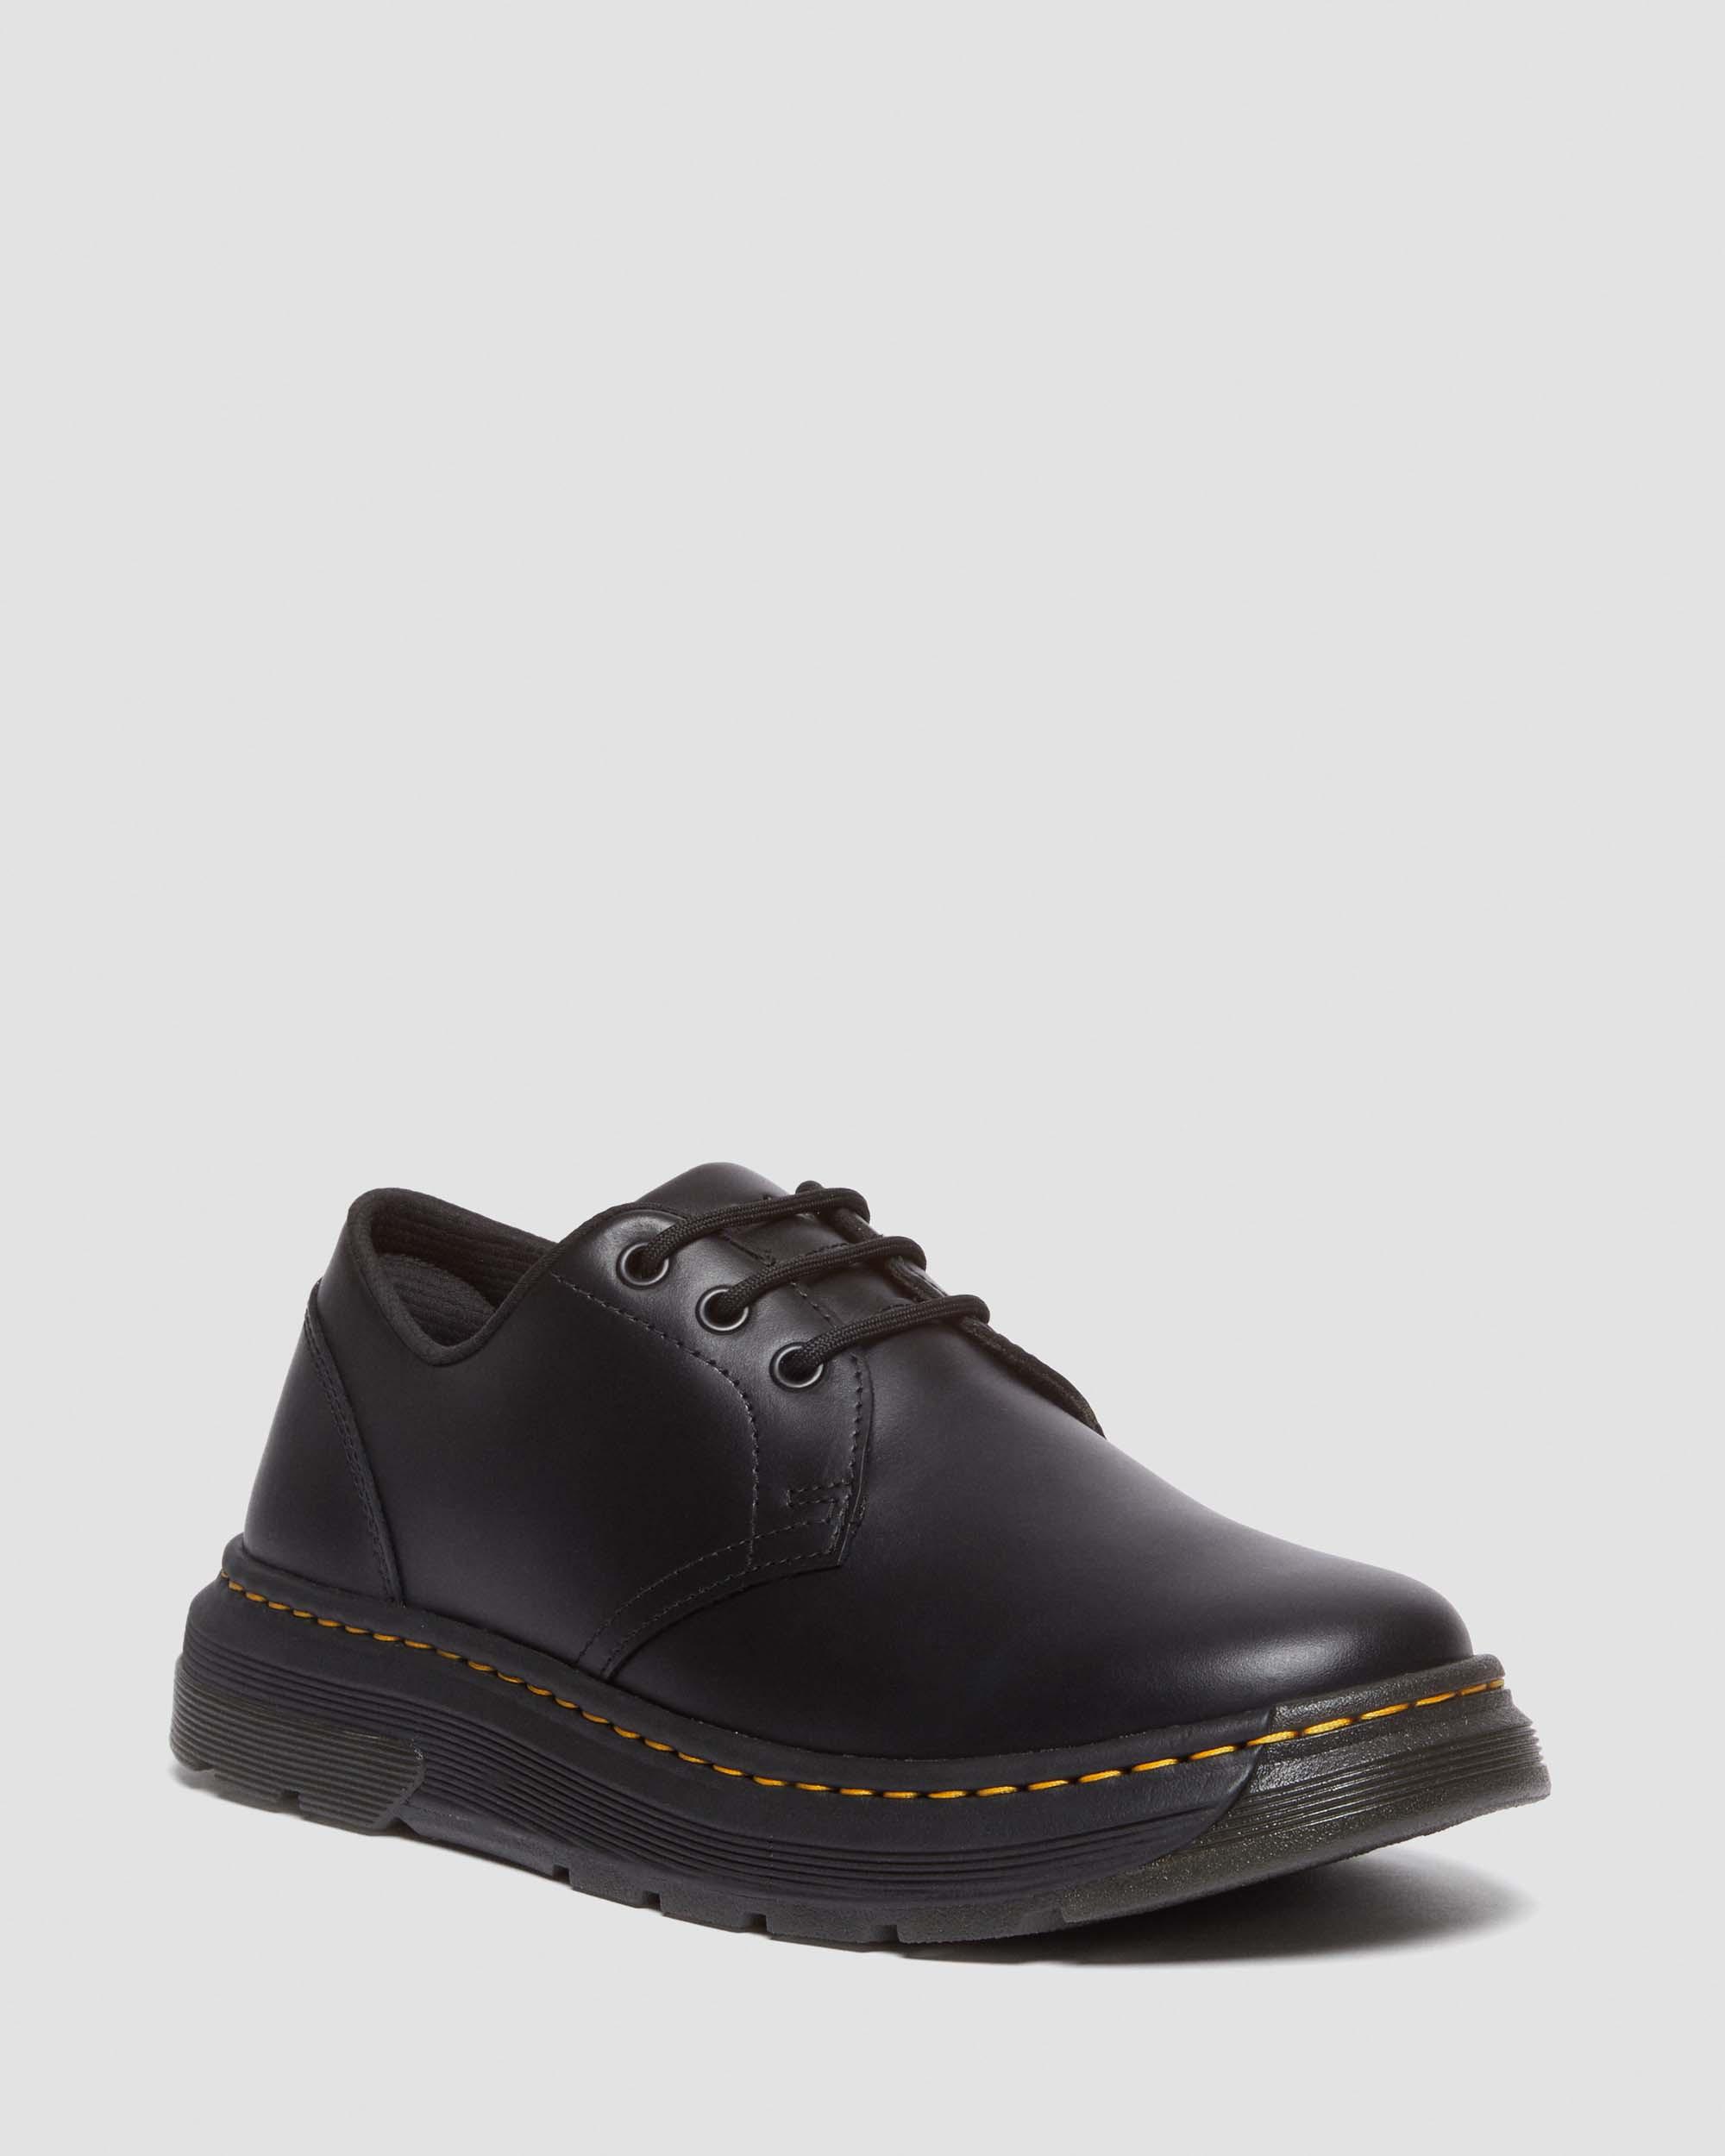 Crewson Lo Black Leather Shoes